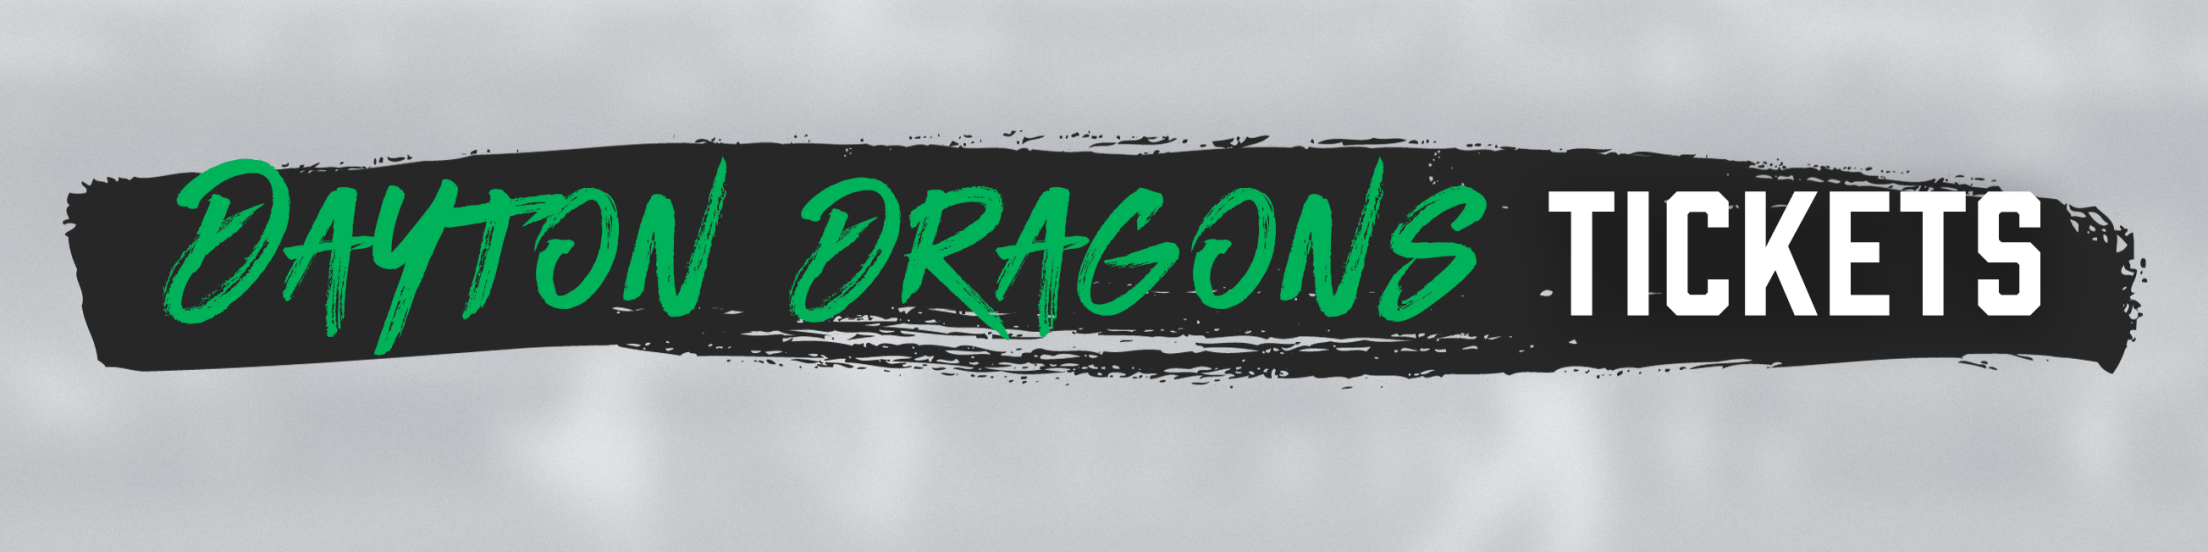 Dayton Dragons Tickets Dragons